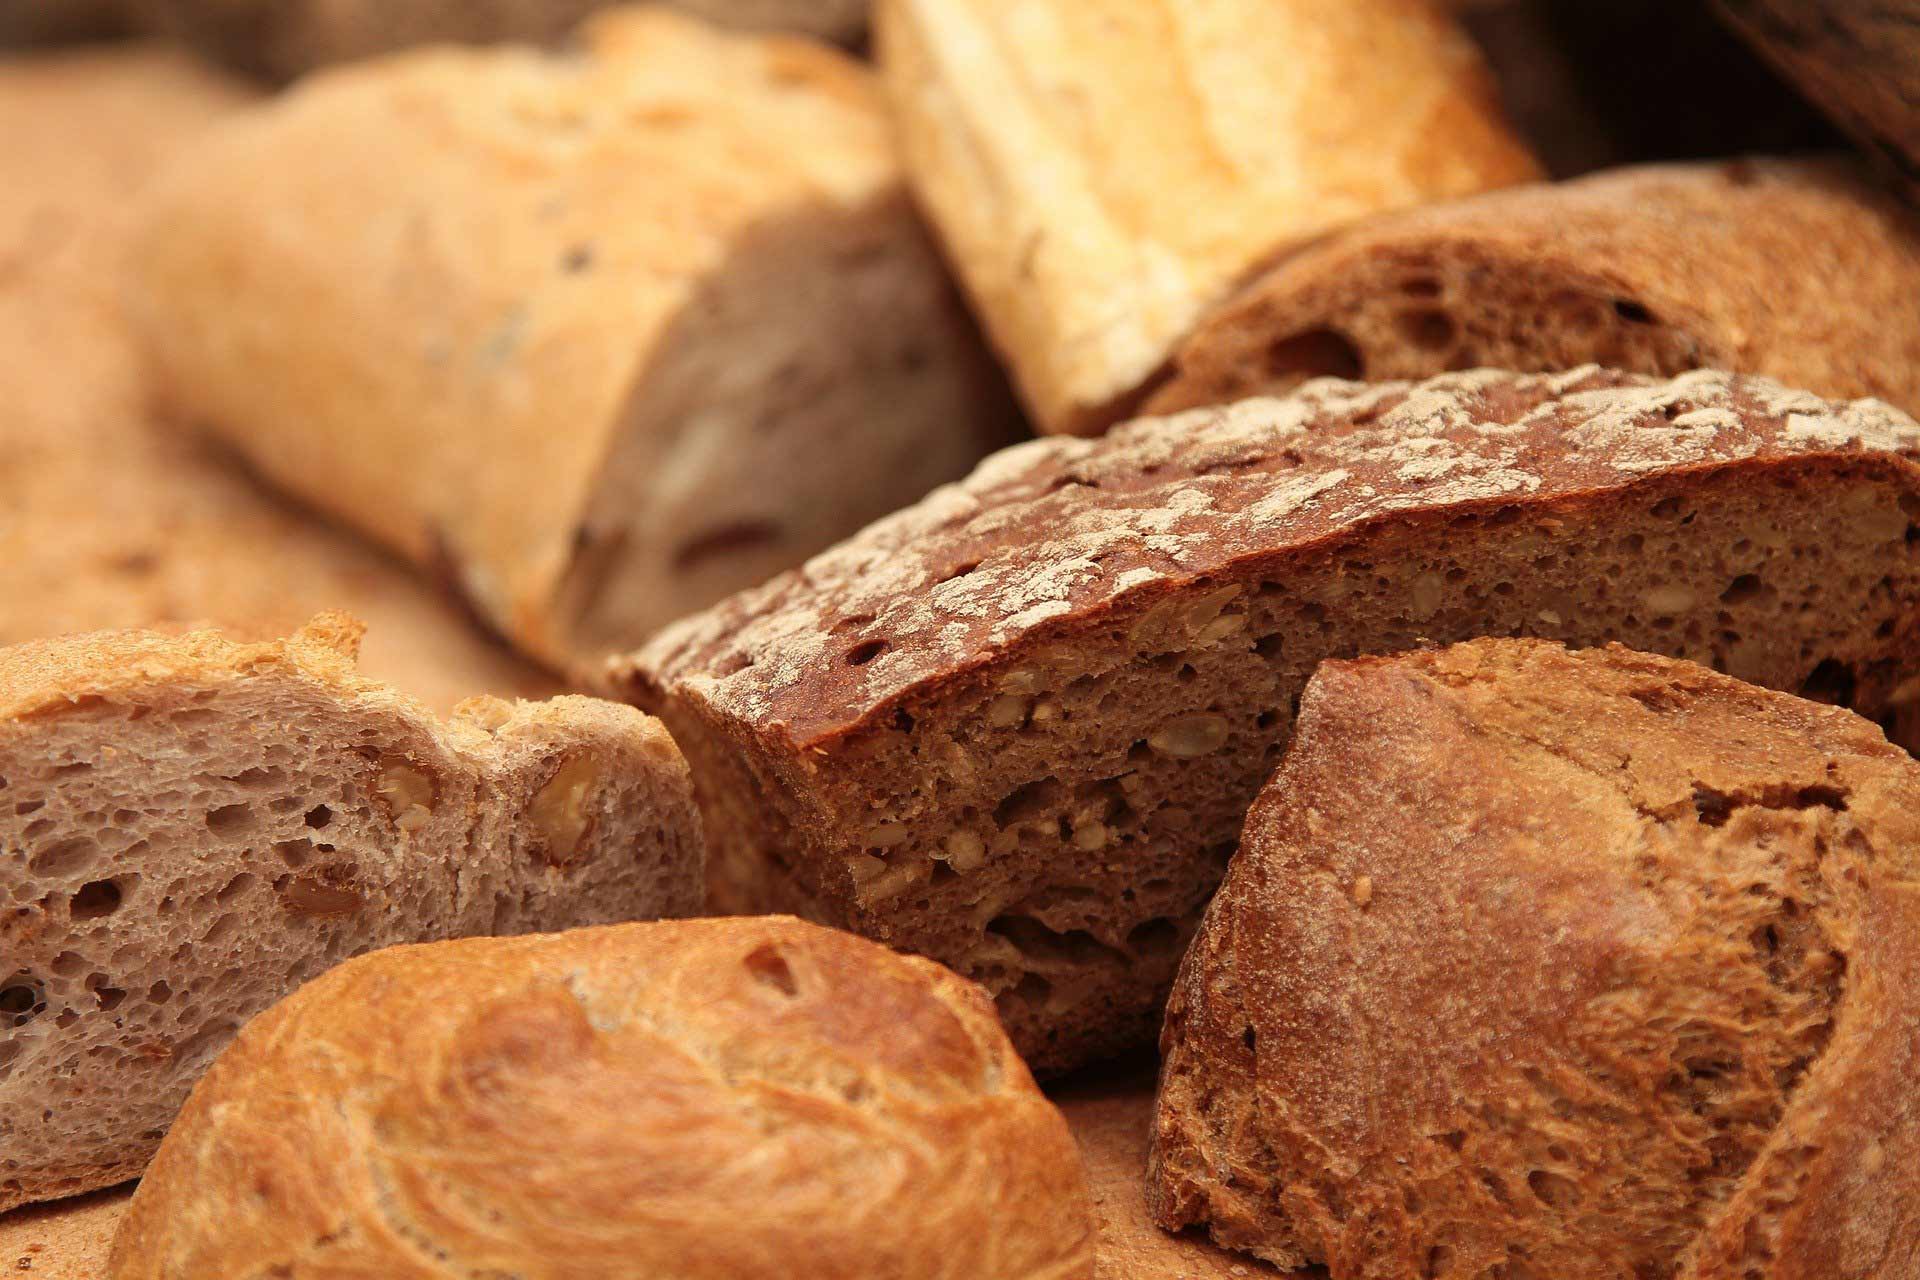 serbian cuisine - bread